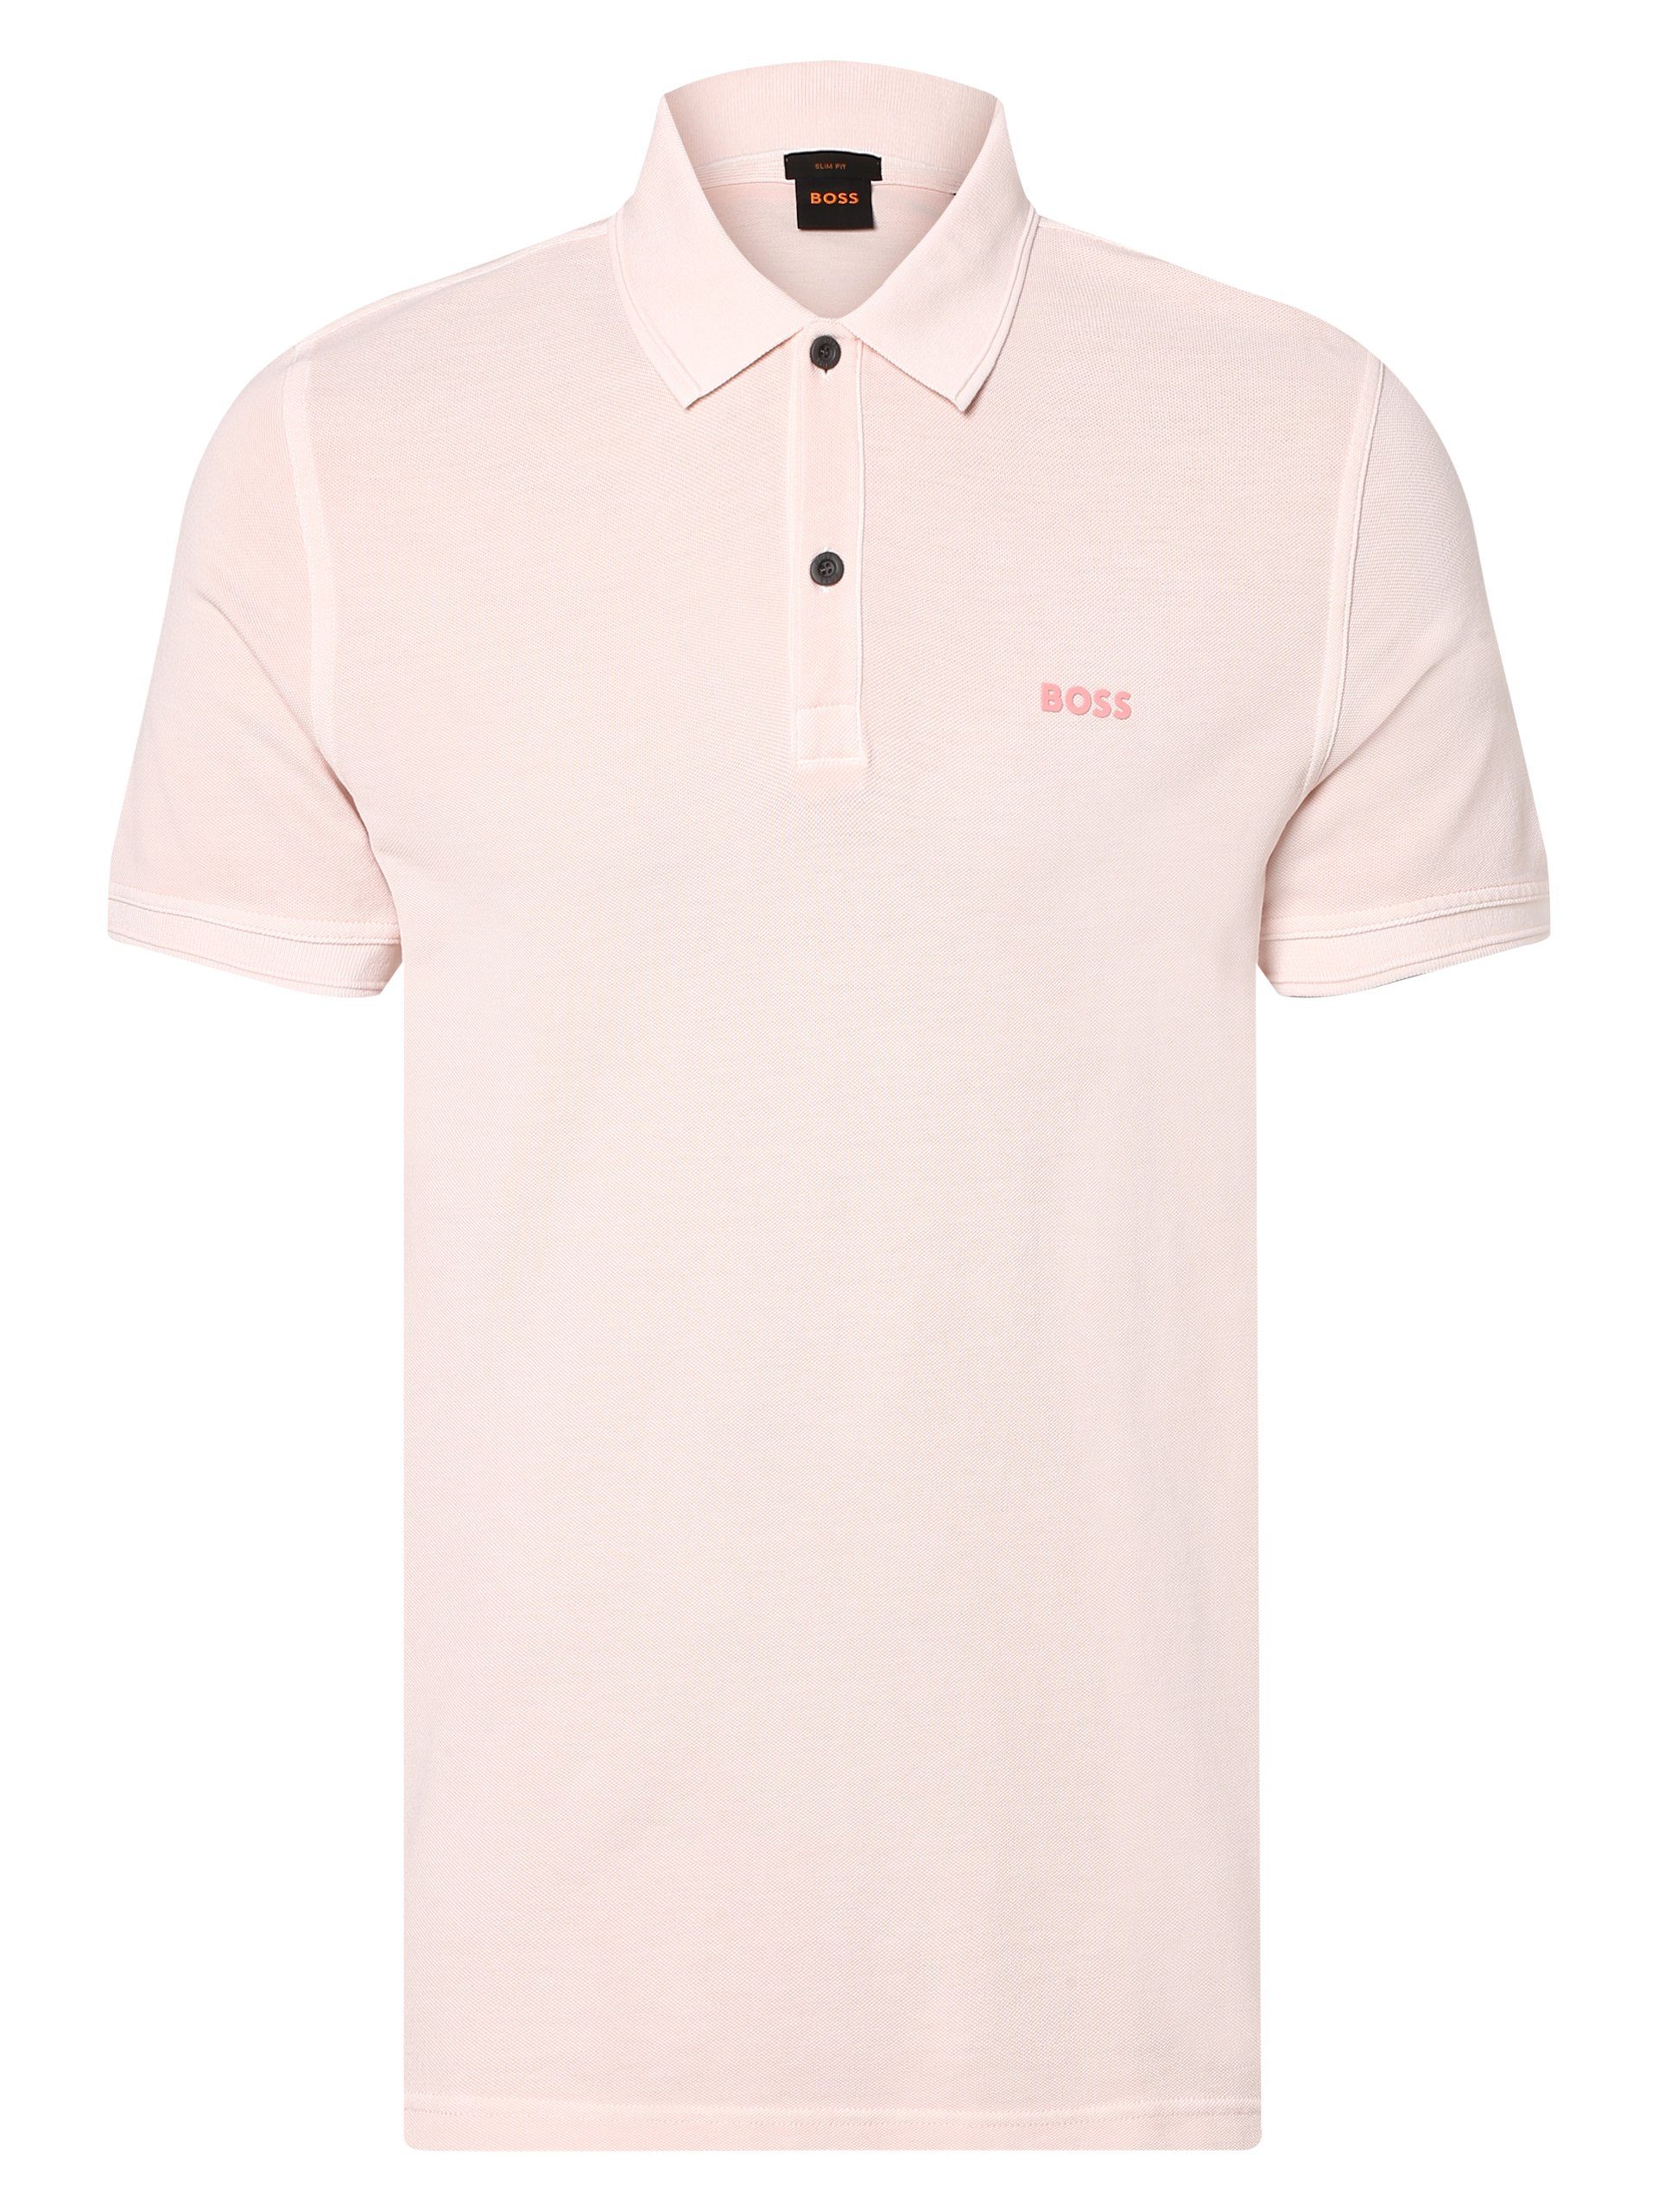 BOSS ORANGE Poloshirt Prime rosa